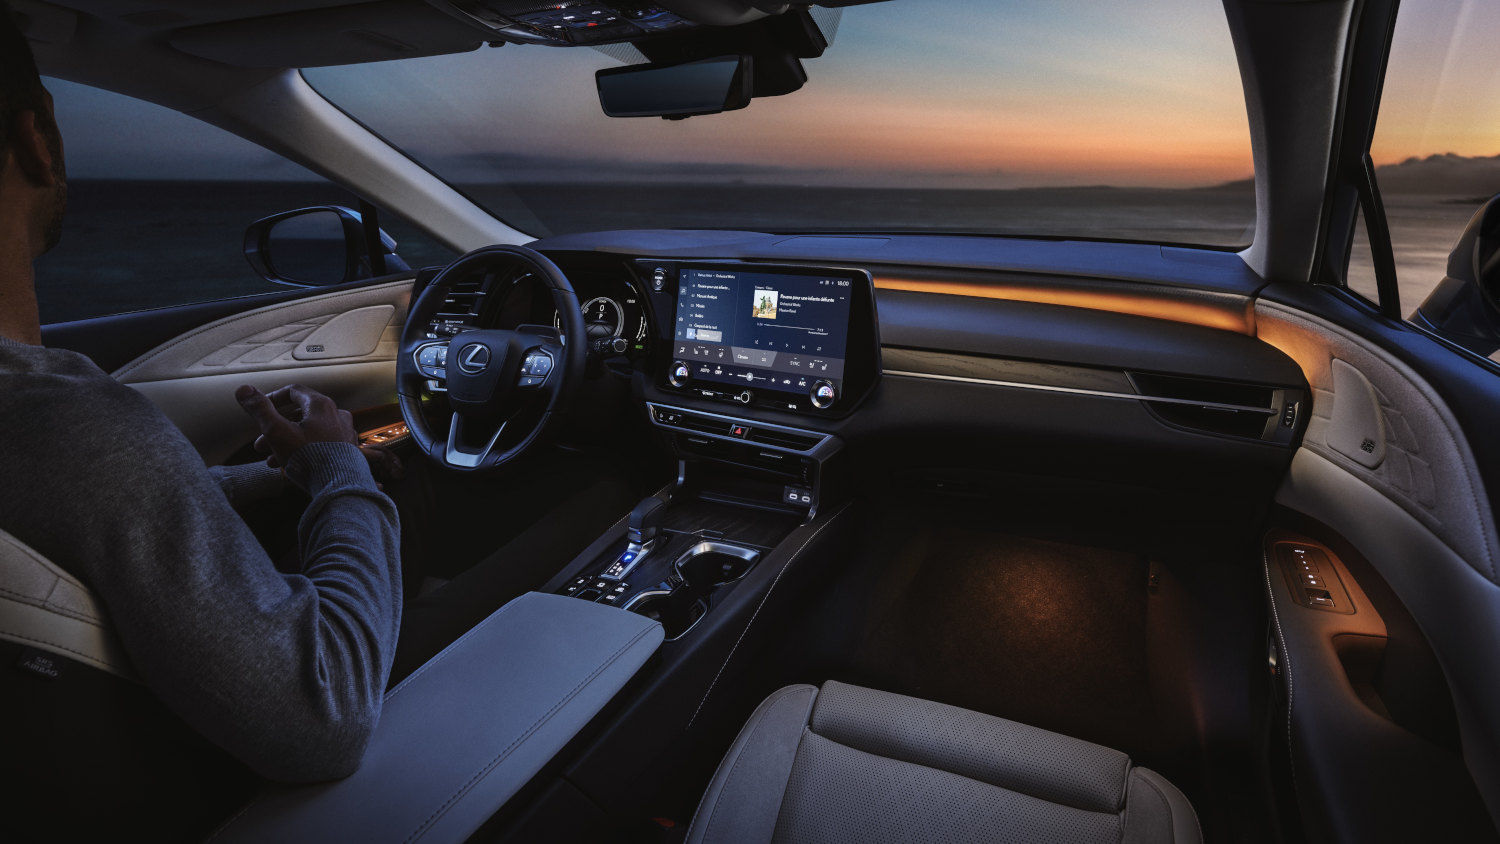 Inside the Lexus RX luxury SUV